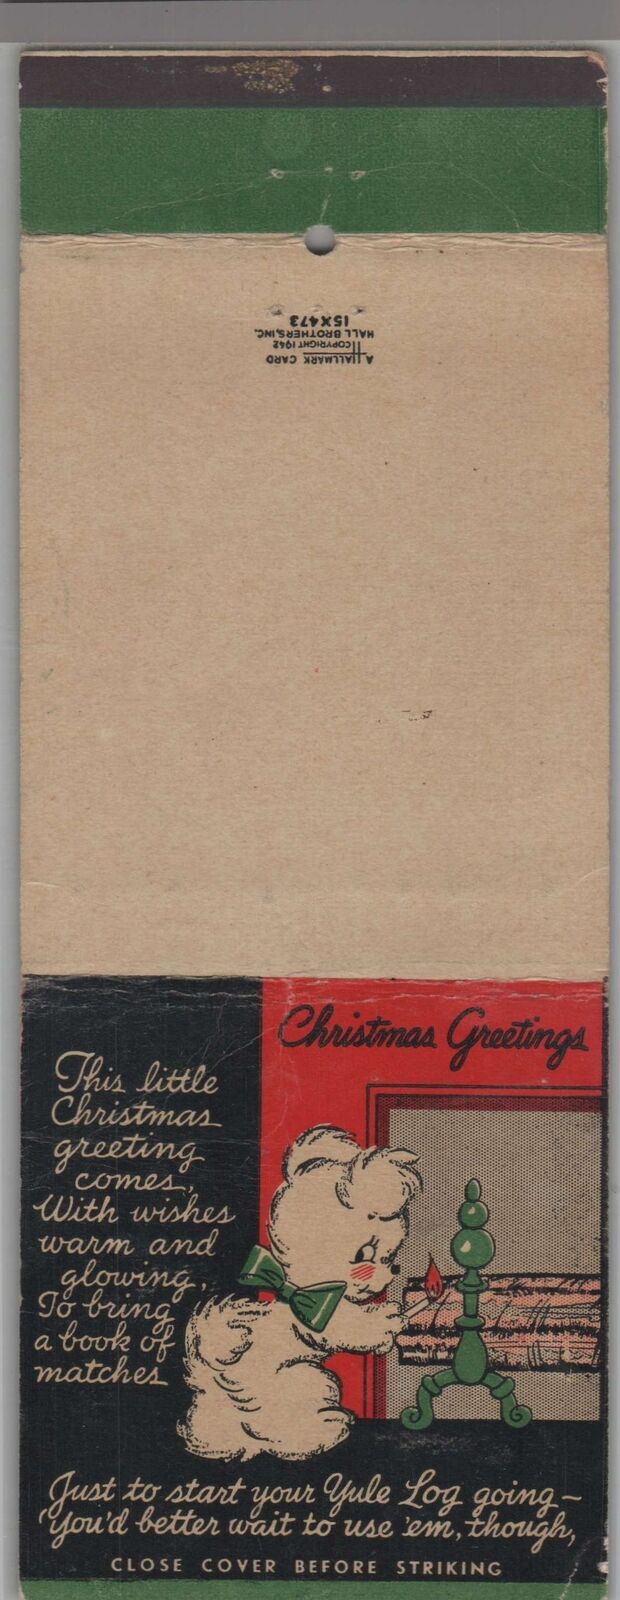 Giant Matchbook Cover - Hallmark Cards Christmas Greetings